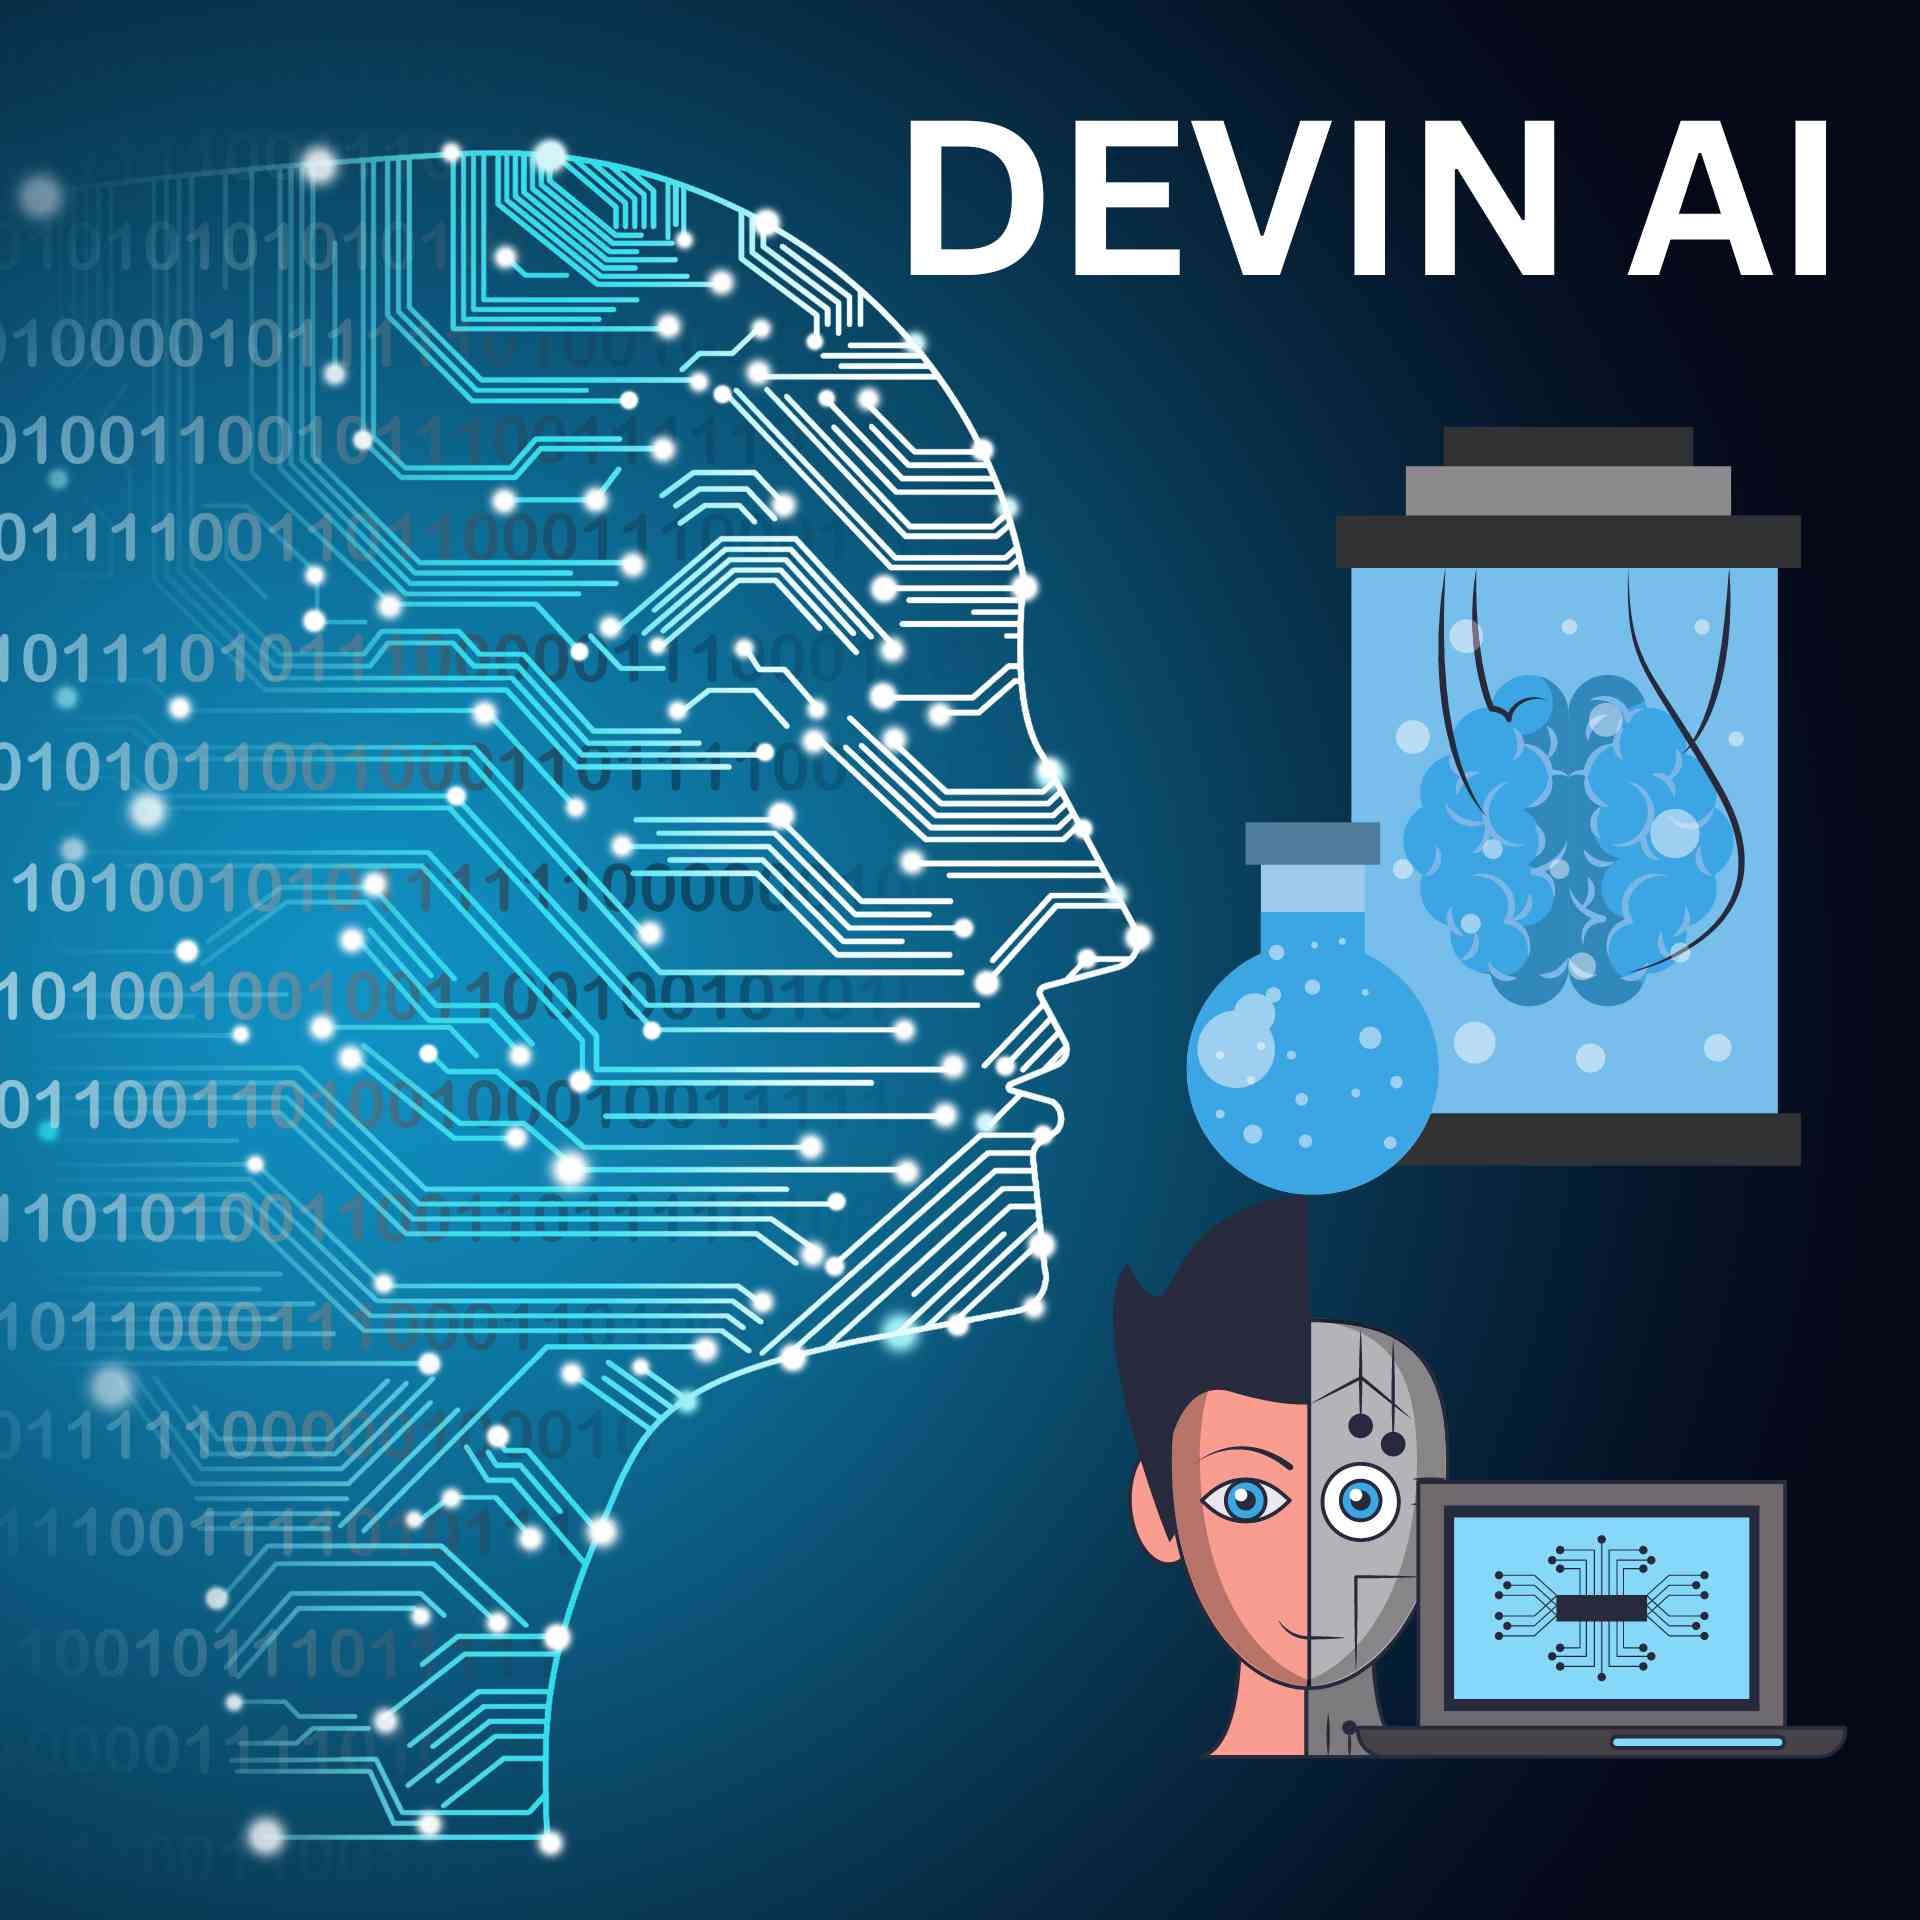 Meet Devin AI: The World’s First AI Software Engineer